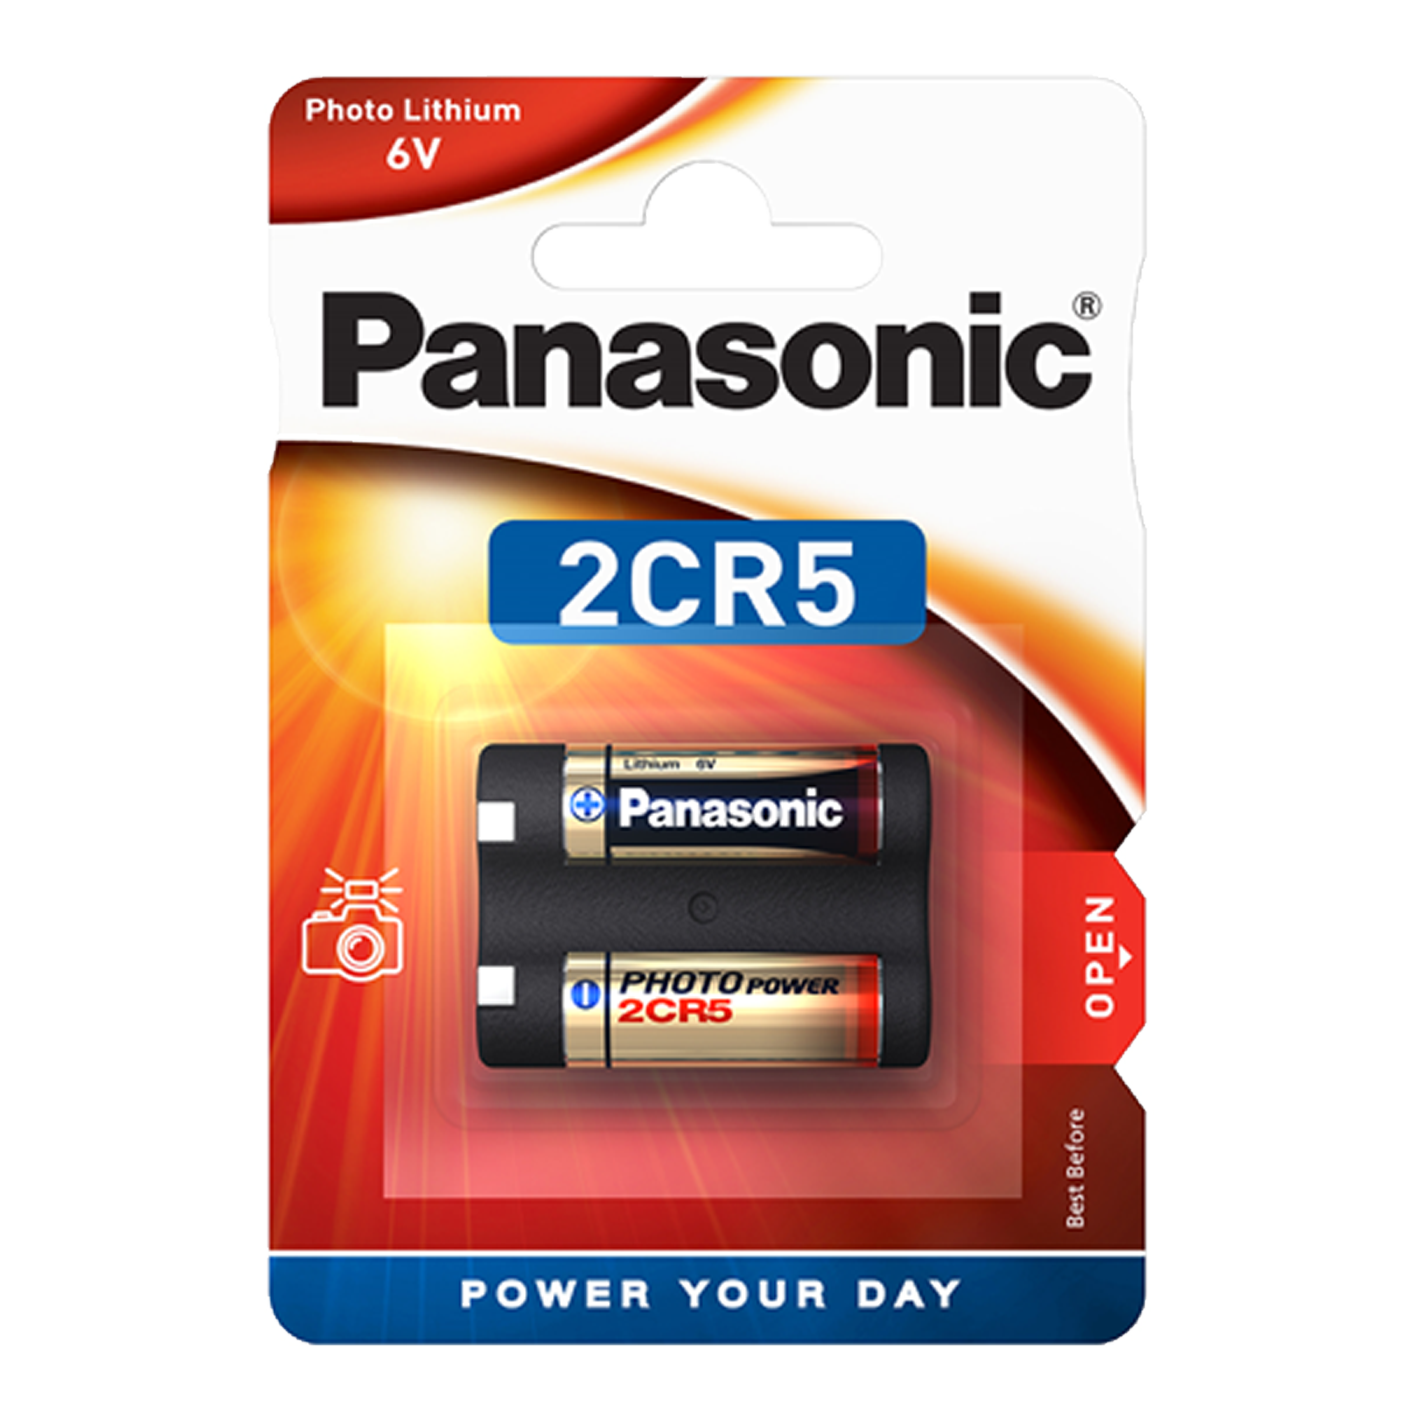 Panasonic 2CR5M Litio, paquete de 1